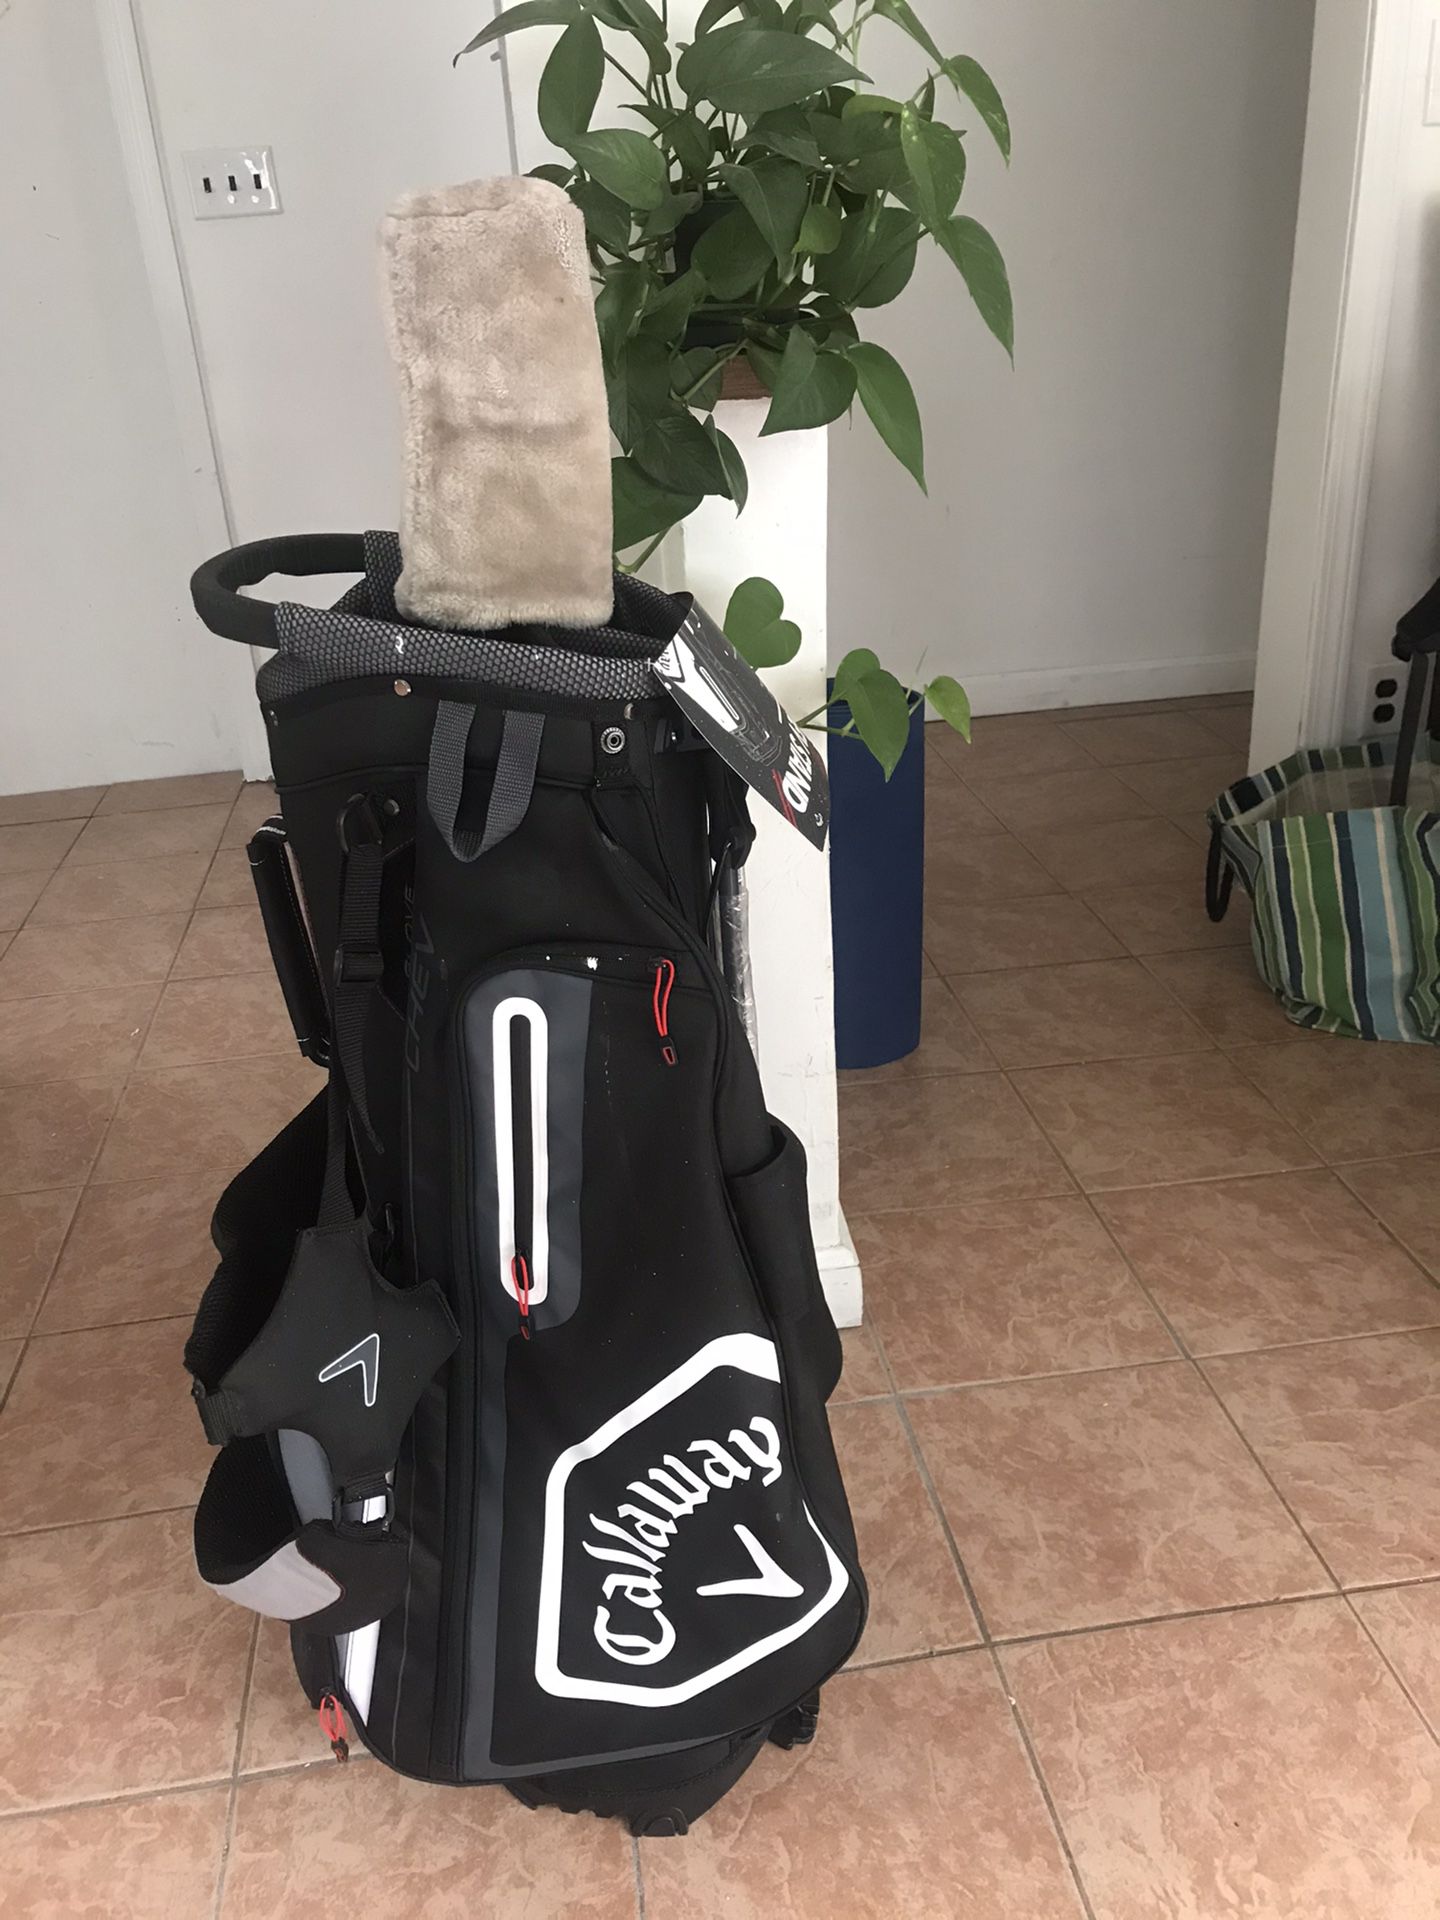 Callaway golf bag